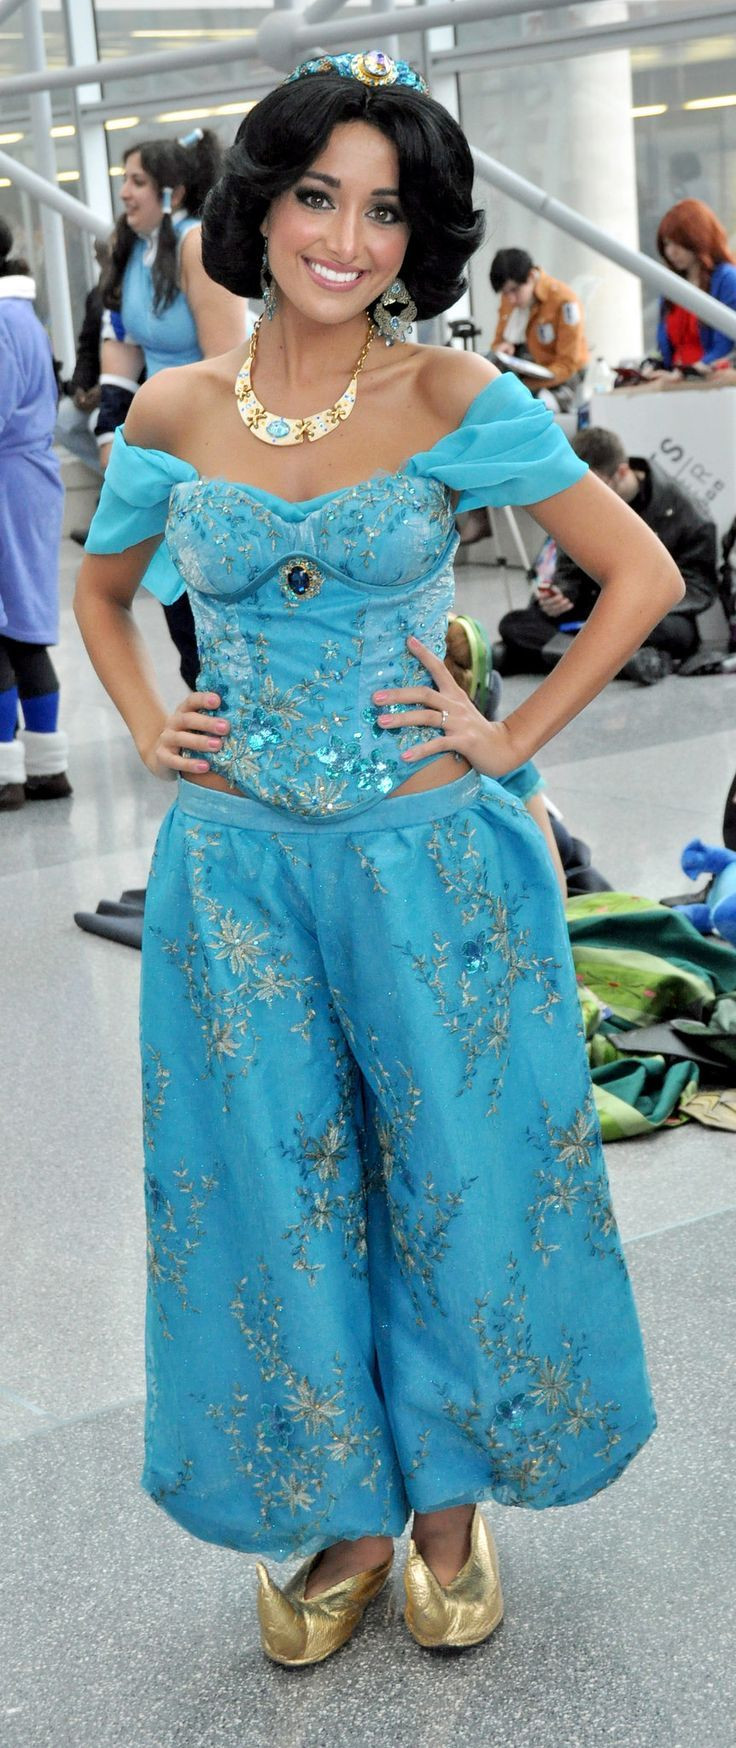 Best ideas about Jasmine Costume DIY
. Save or Pin Best 25 Princess jasmine cosplay ideas on Pinterest Now.